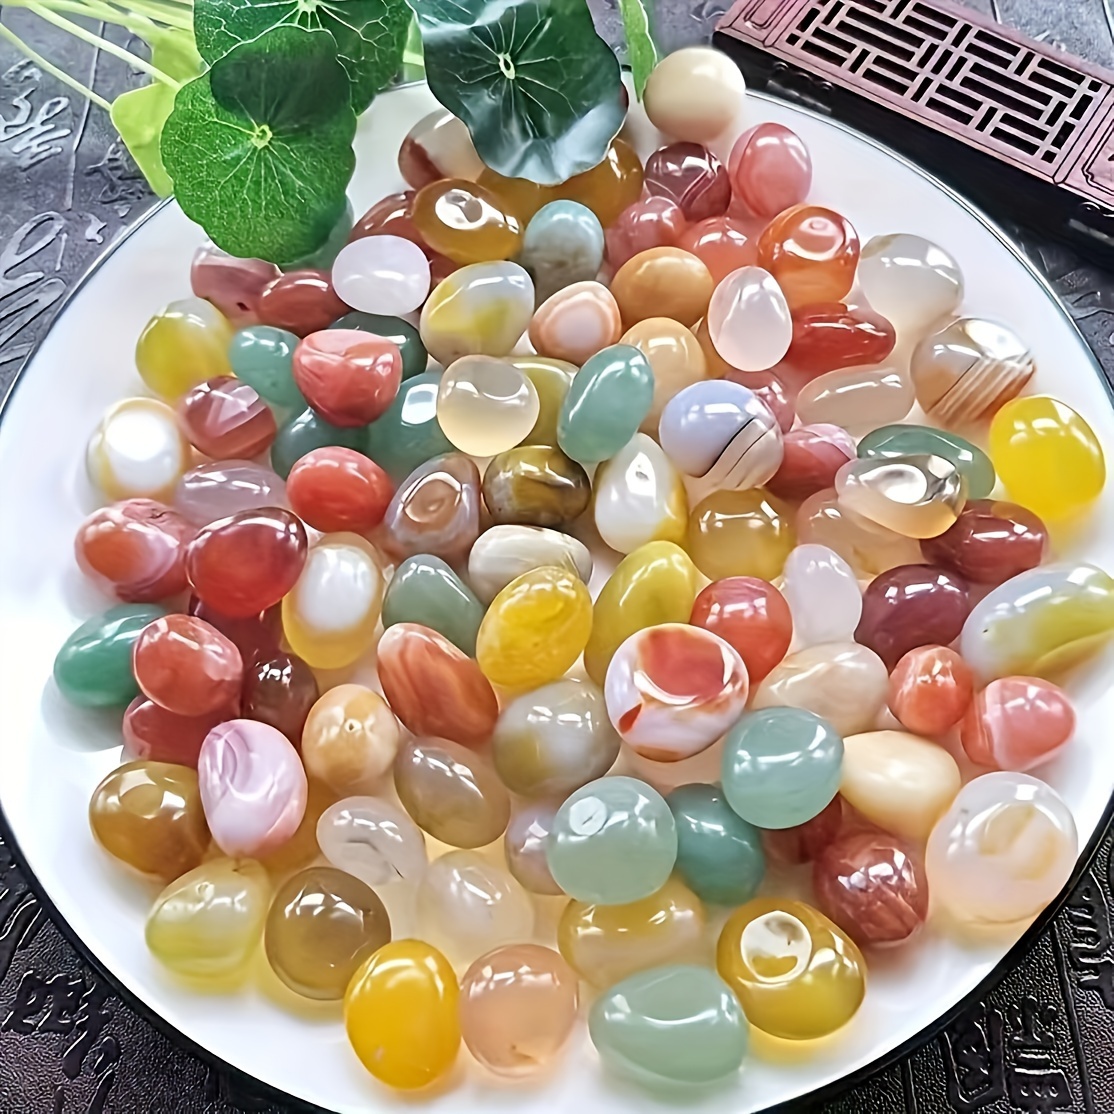 

200g Assorted Colorful Agate Pebbles, Natural Polished Stones, 0.5-2cm Small Decorative Pebbles For Aquarium, Garden View, Hydroponics